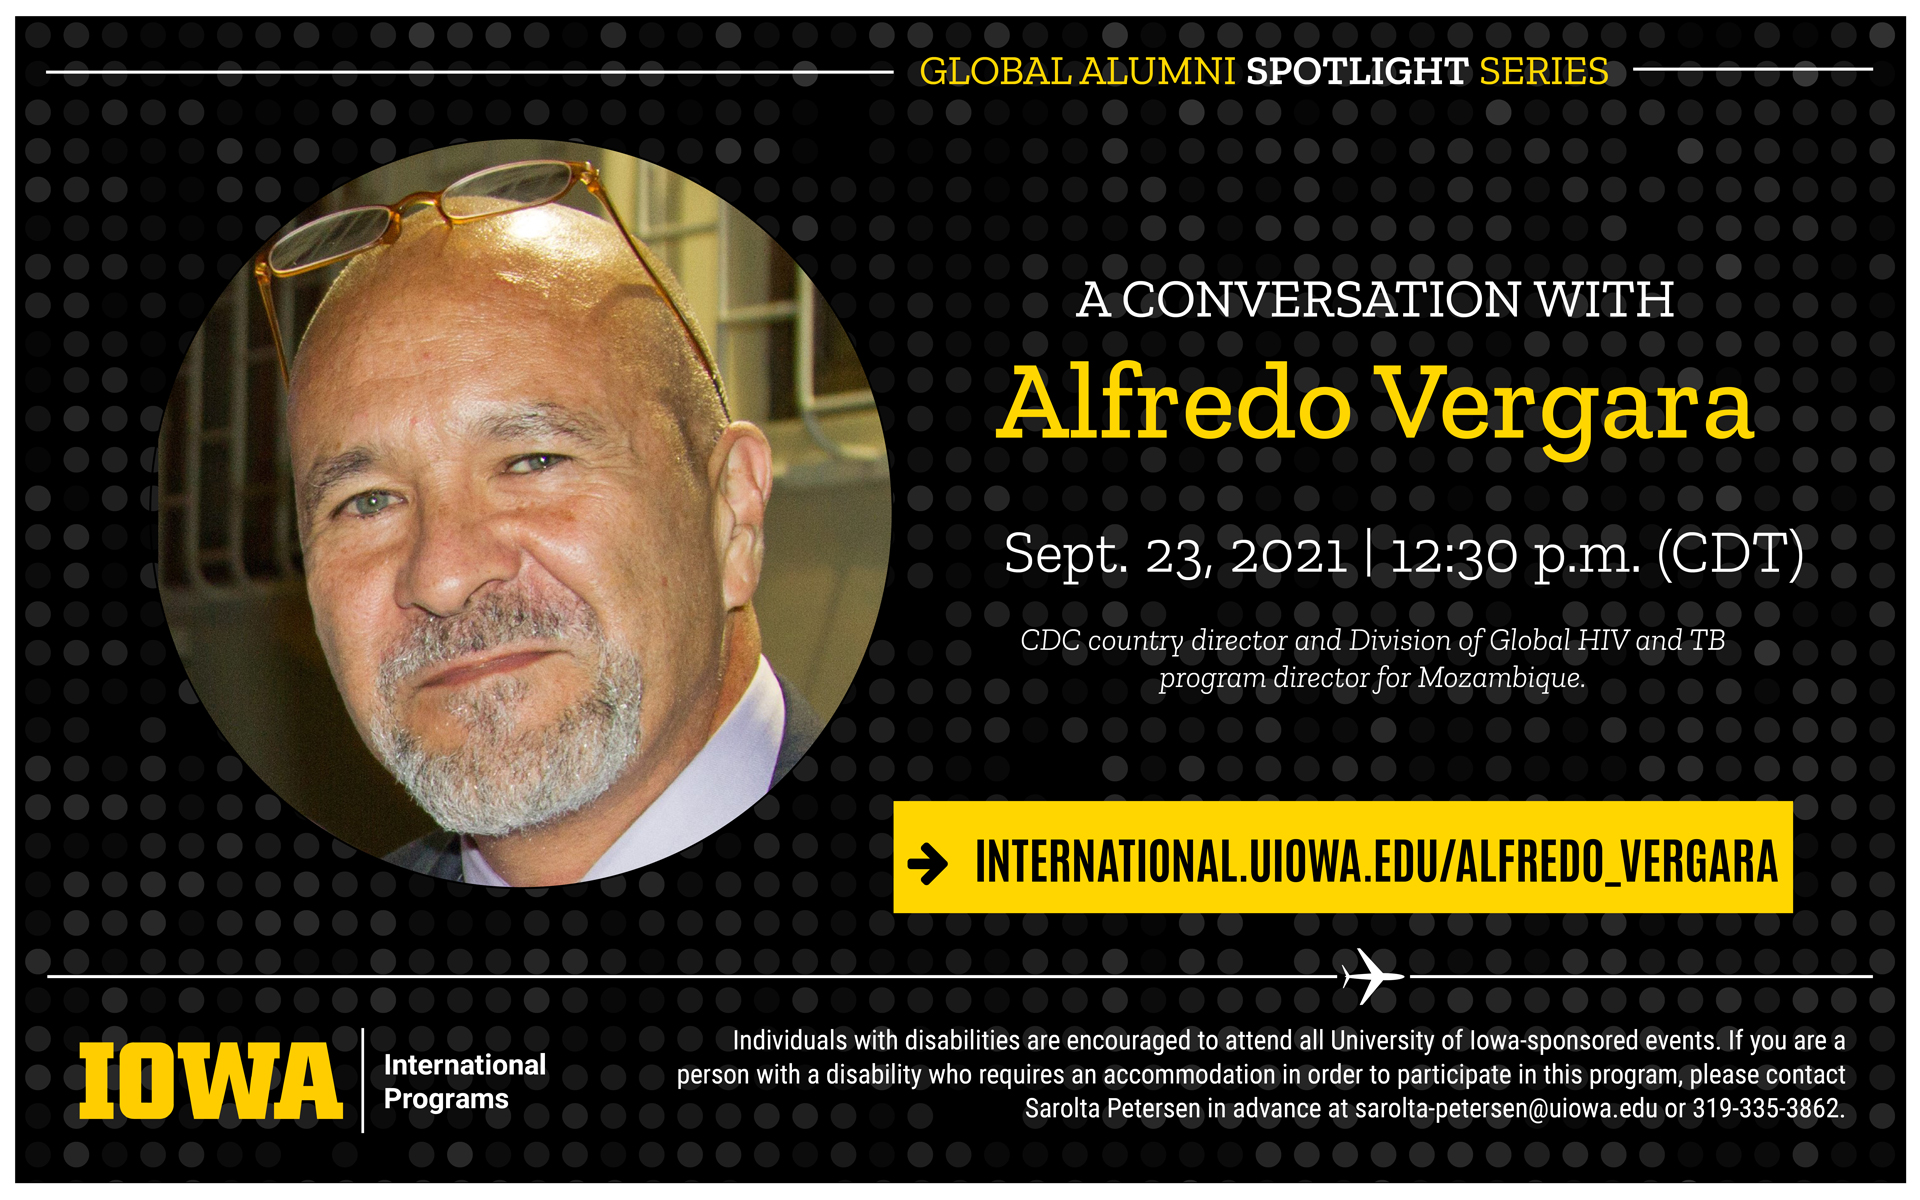 A conversation with Alfredo Vergara September 23 at 12 30 pm CDT visit international.uiowa.edu/alfredo_vergara for more.